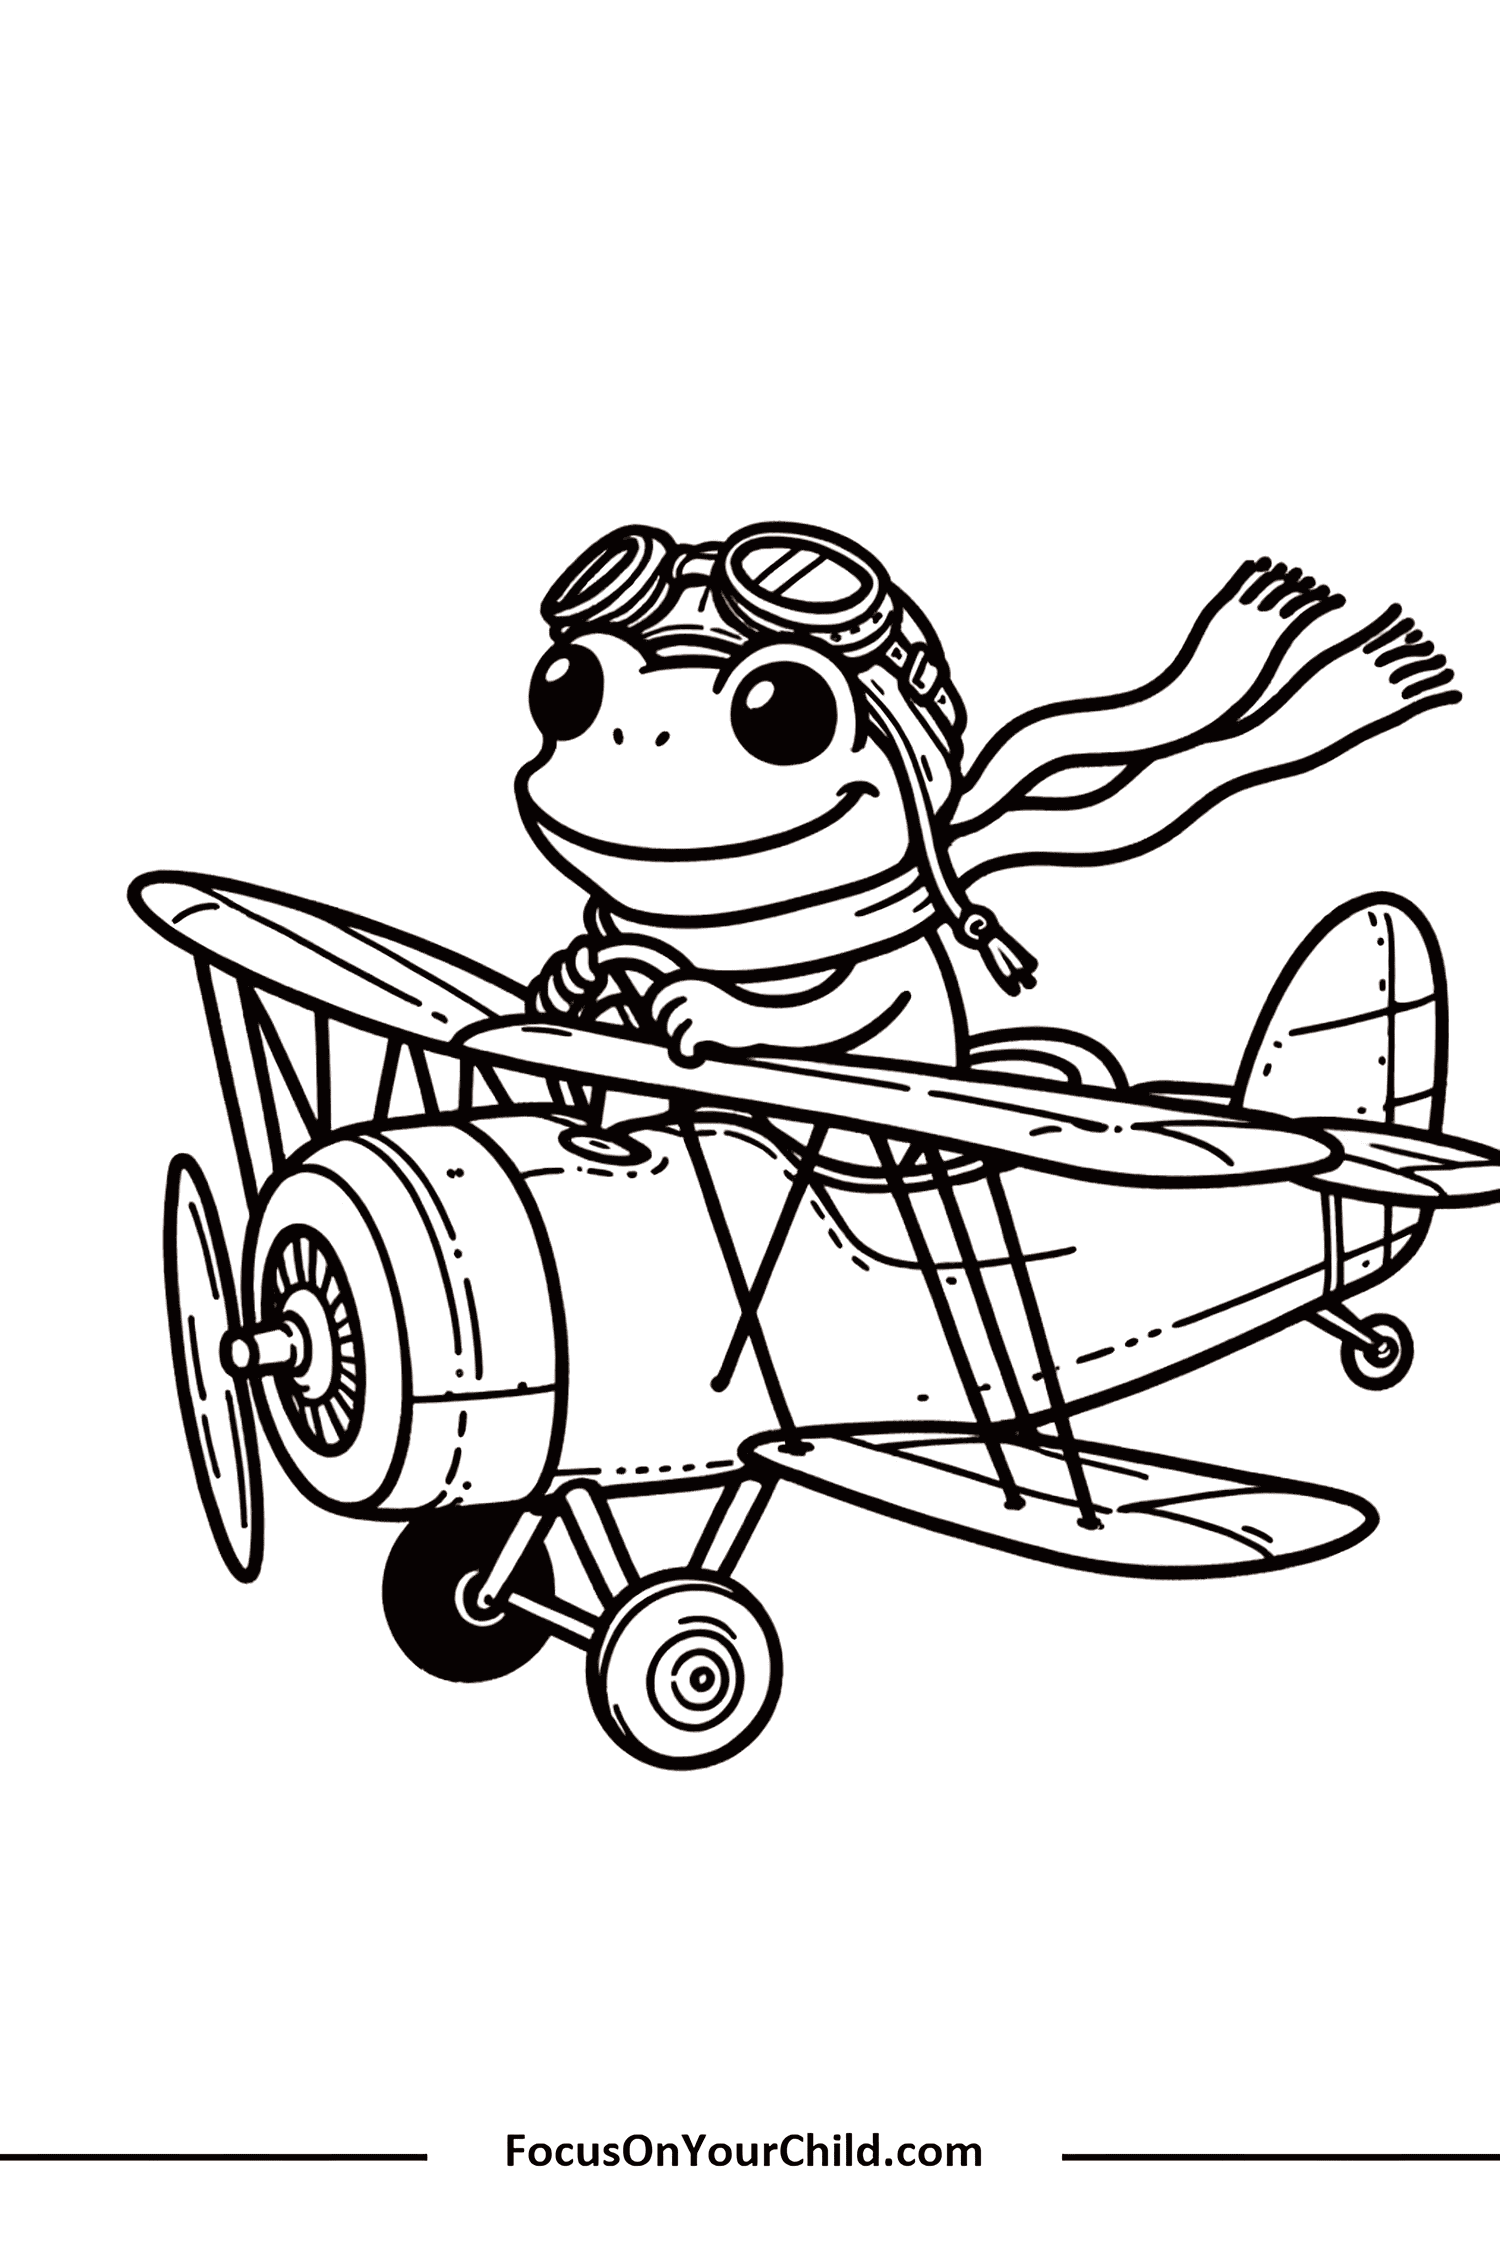 Adventurous frog pilot flying a vintage biplane in a charming cartoon illustration.